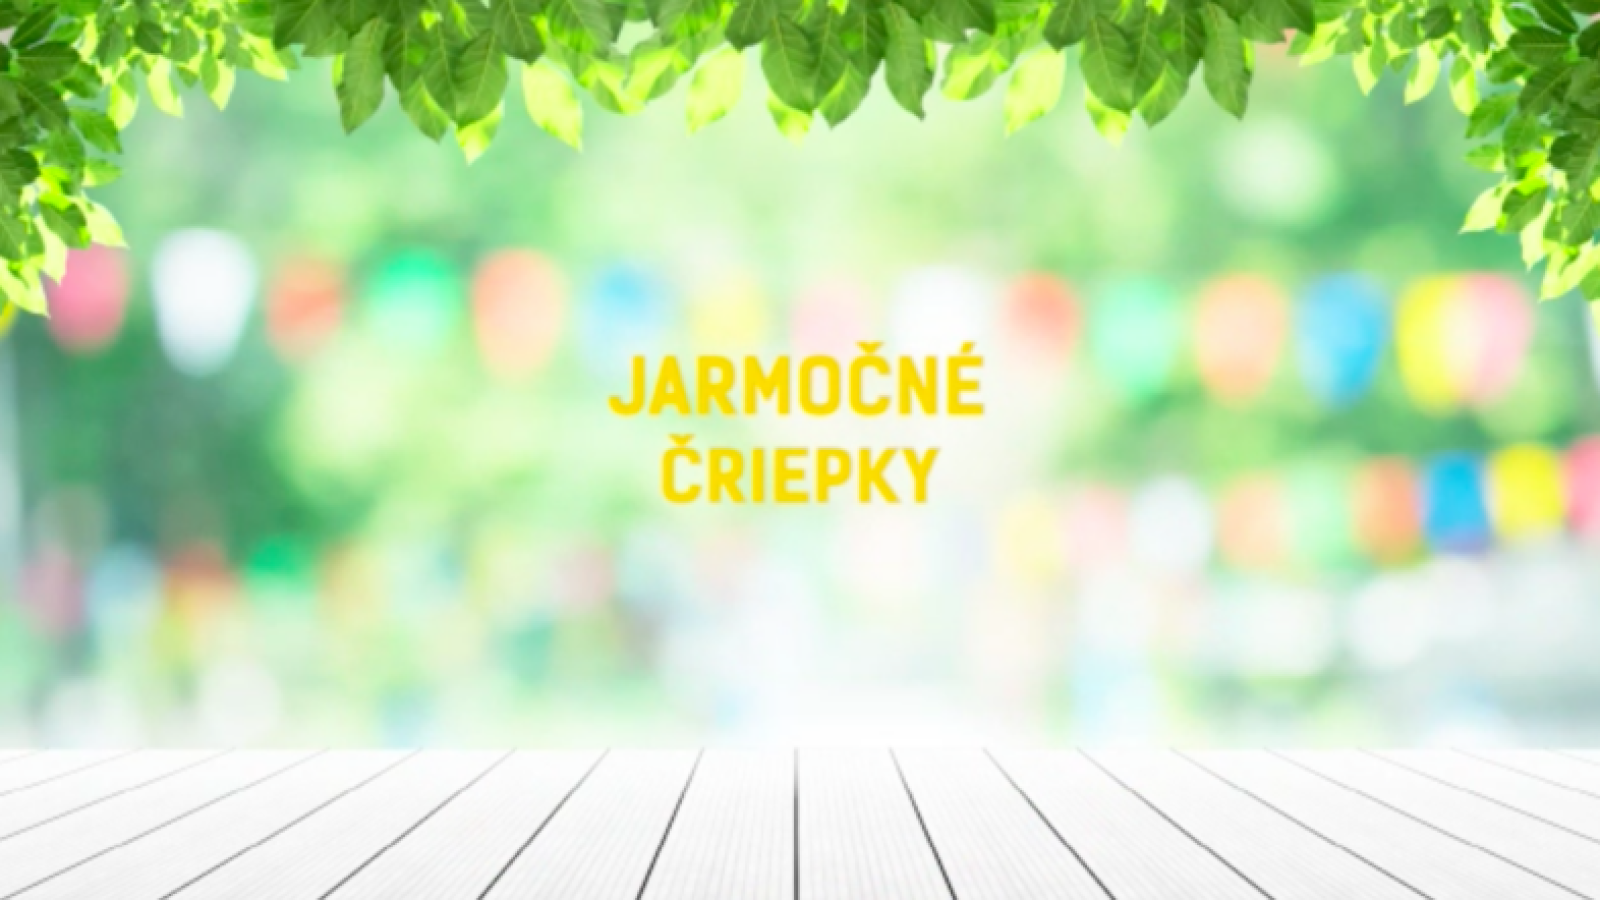 Jarmocne-criepky